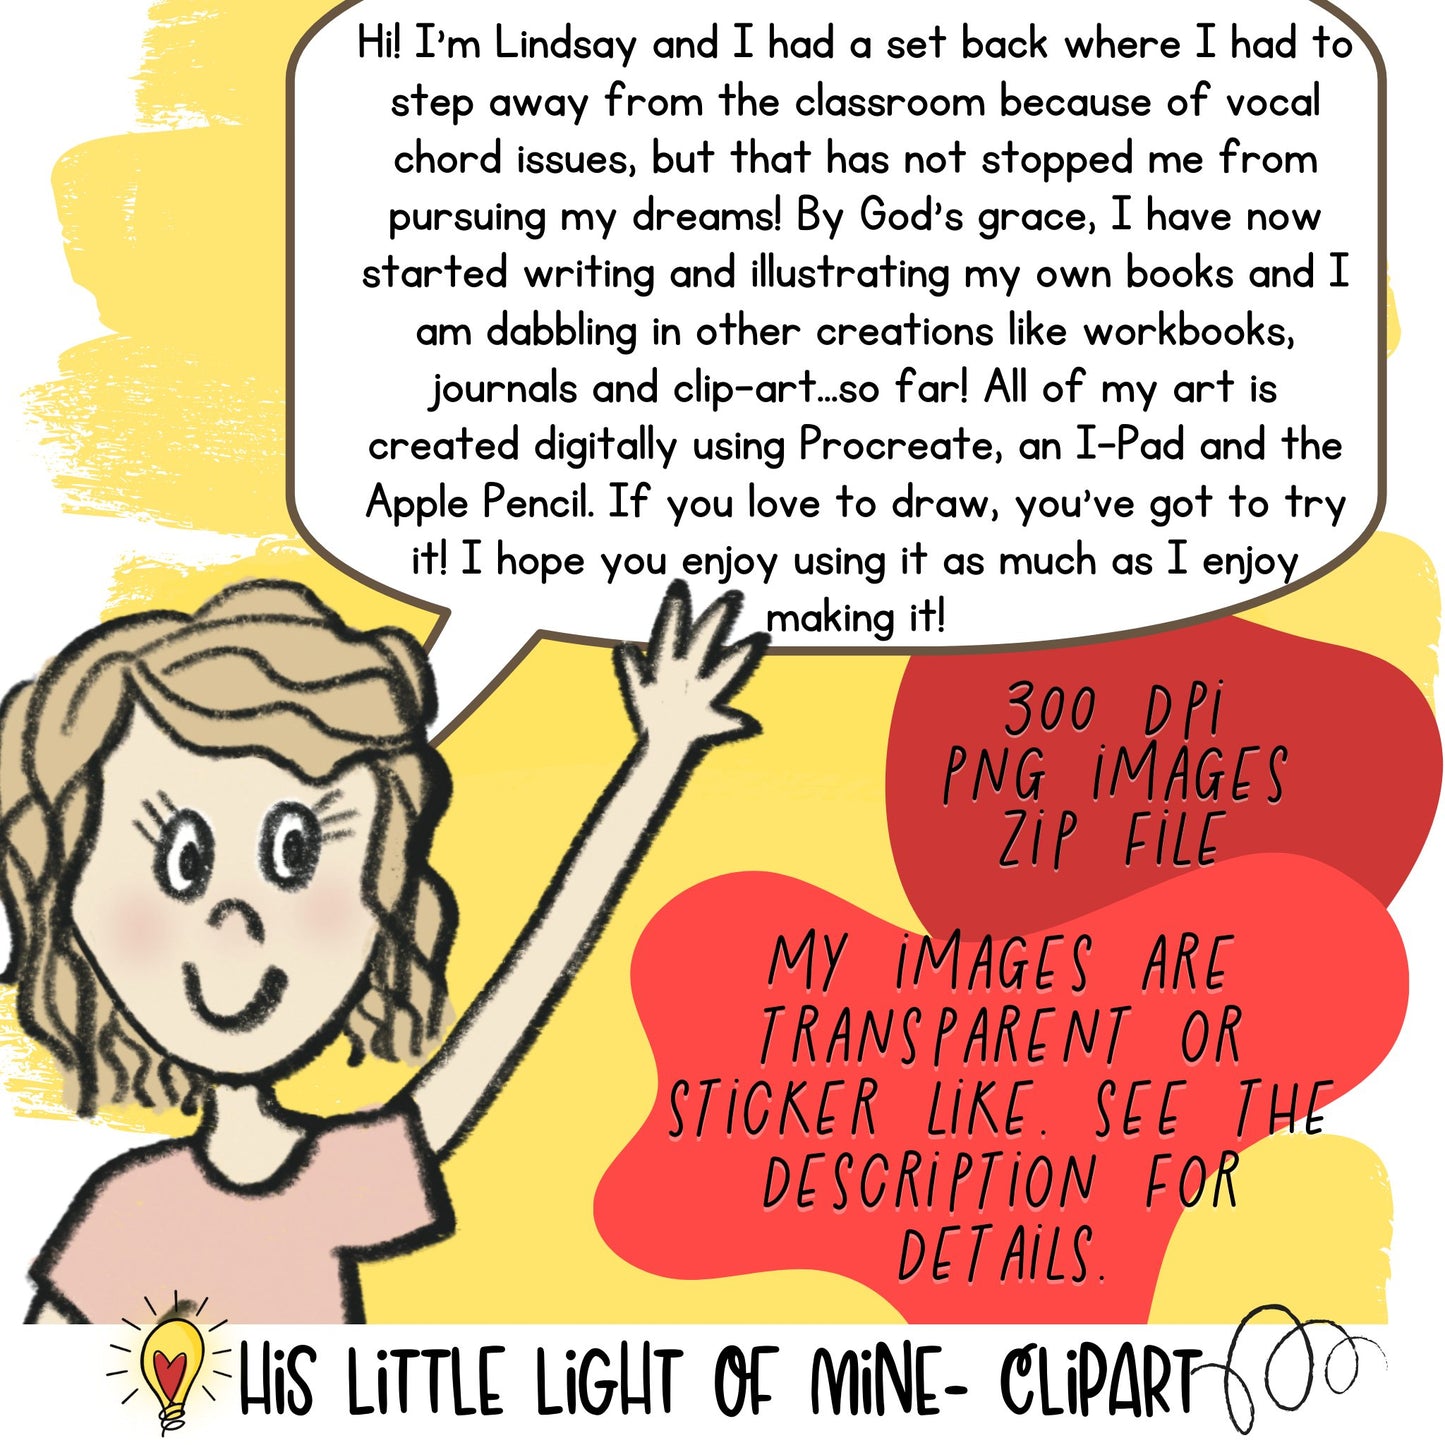 Pumpkins and Jesus clip art pack introduction of the self-published illustrator, Lindsay Dain